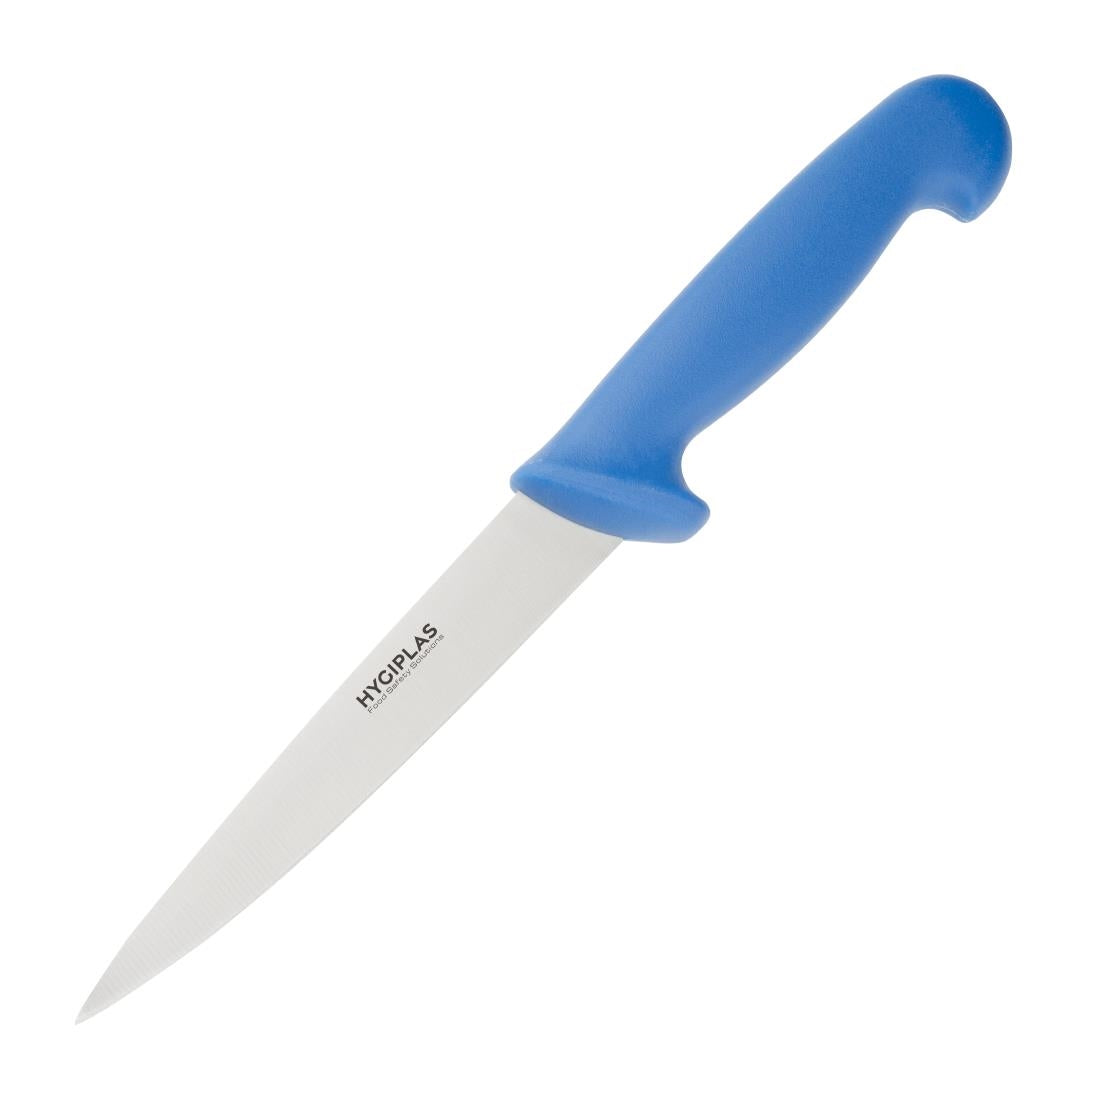 C853 Hygiplas Fillet Knife Blue 15cm JD Catering Equipment Solutions Ltd